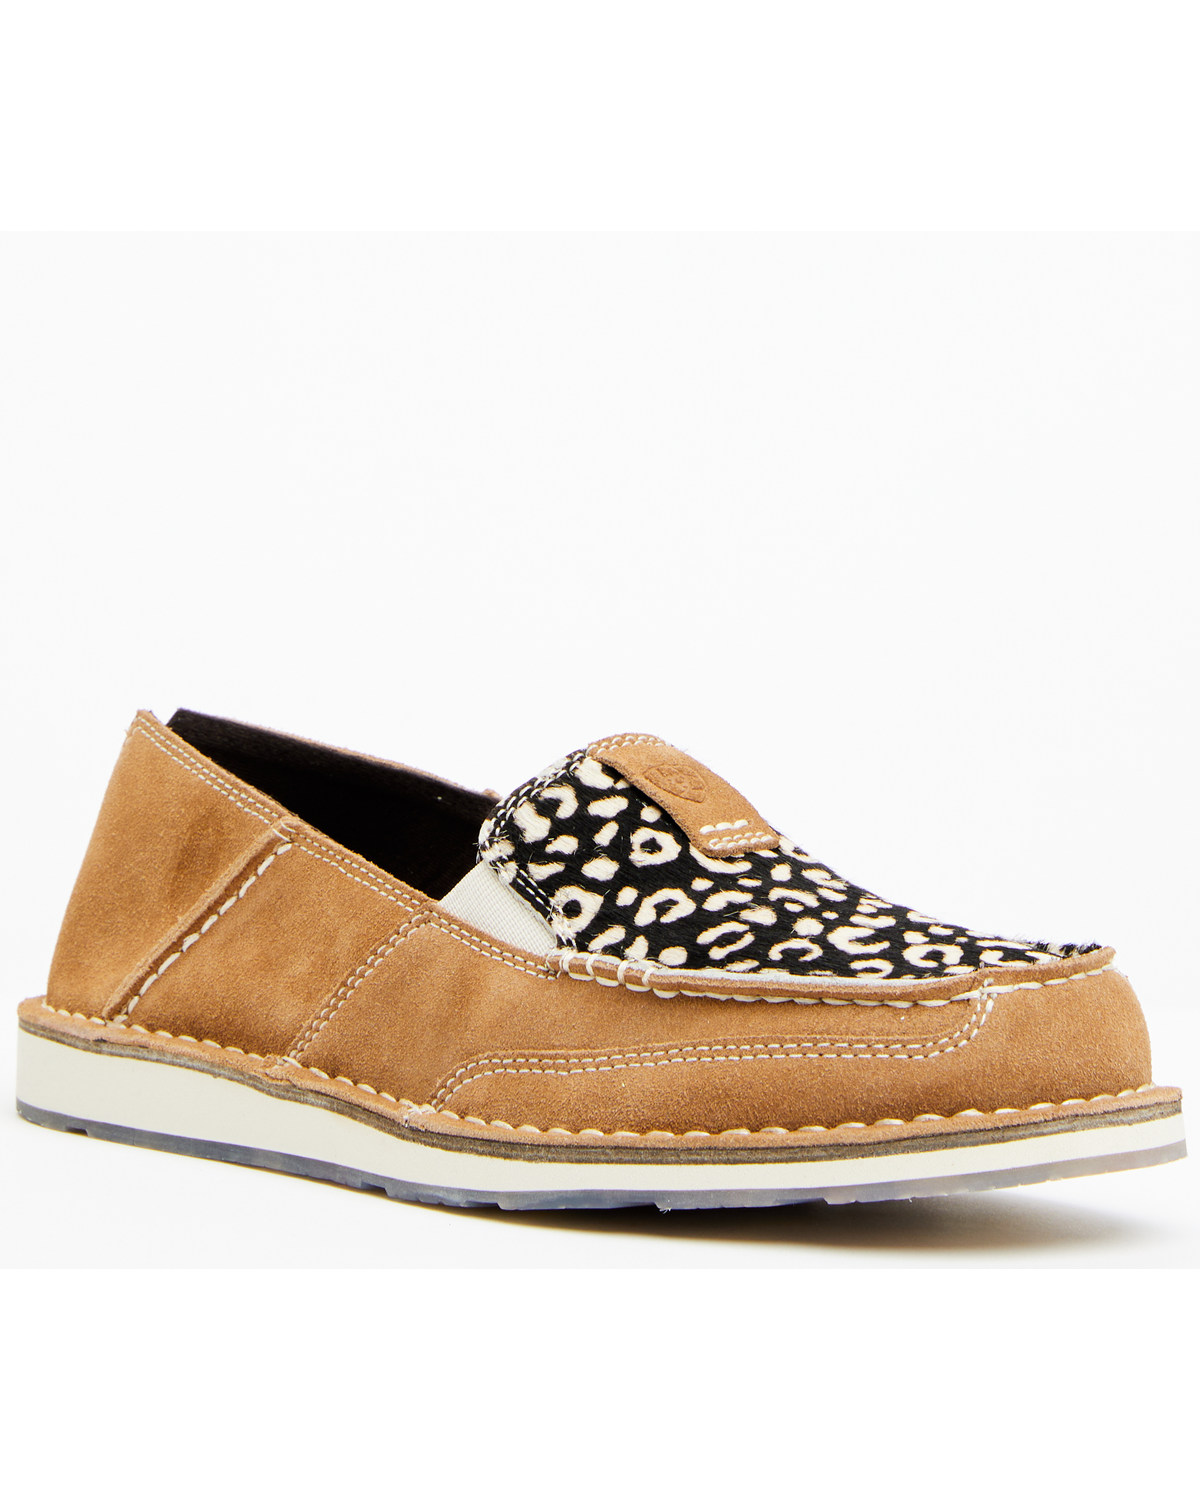 Ariat Women's Cheetah Print Cruiser Shoes - Moc Toe